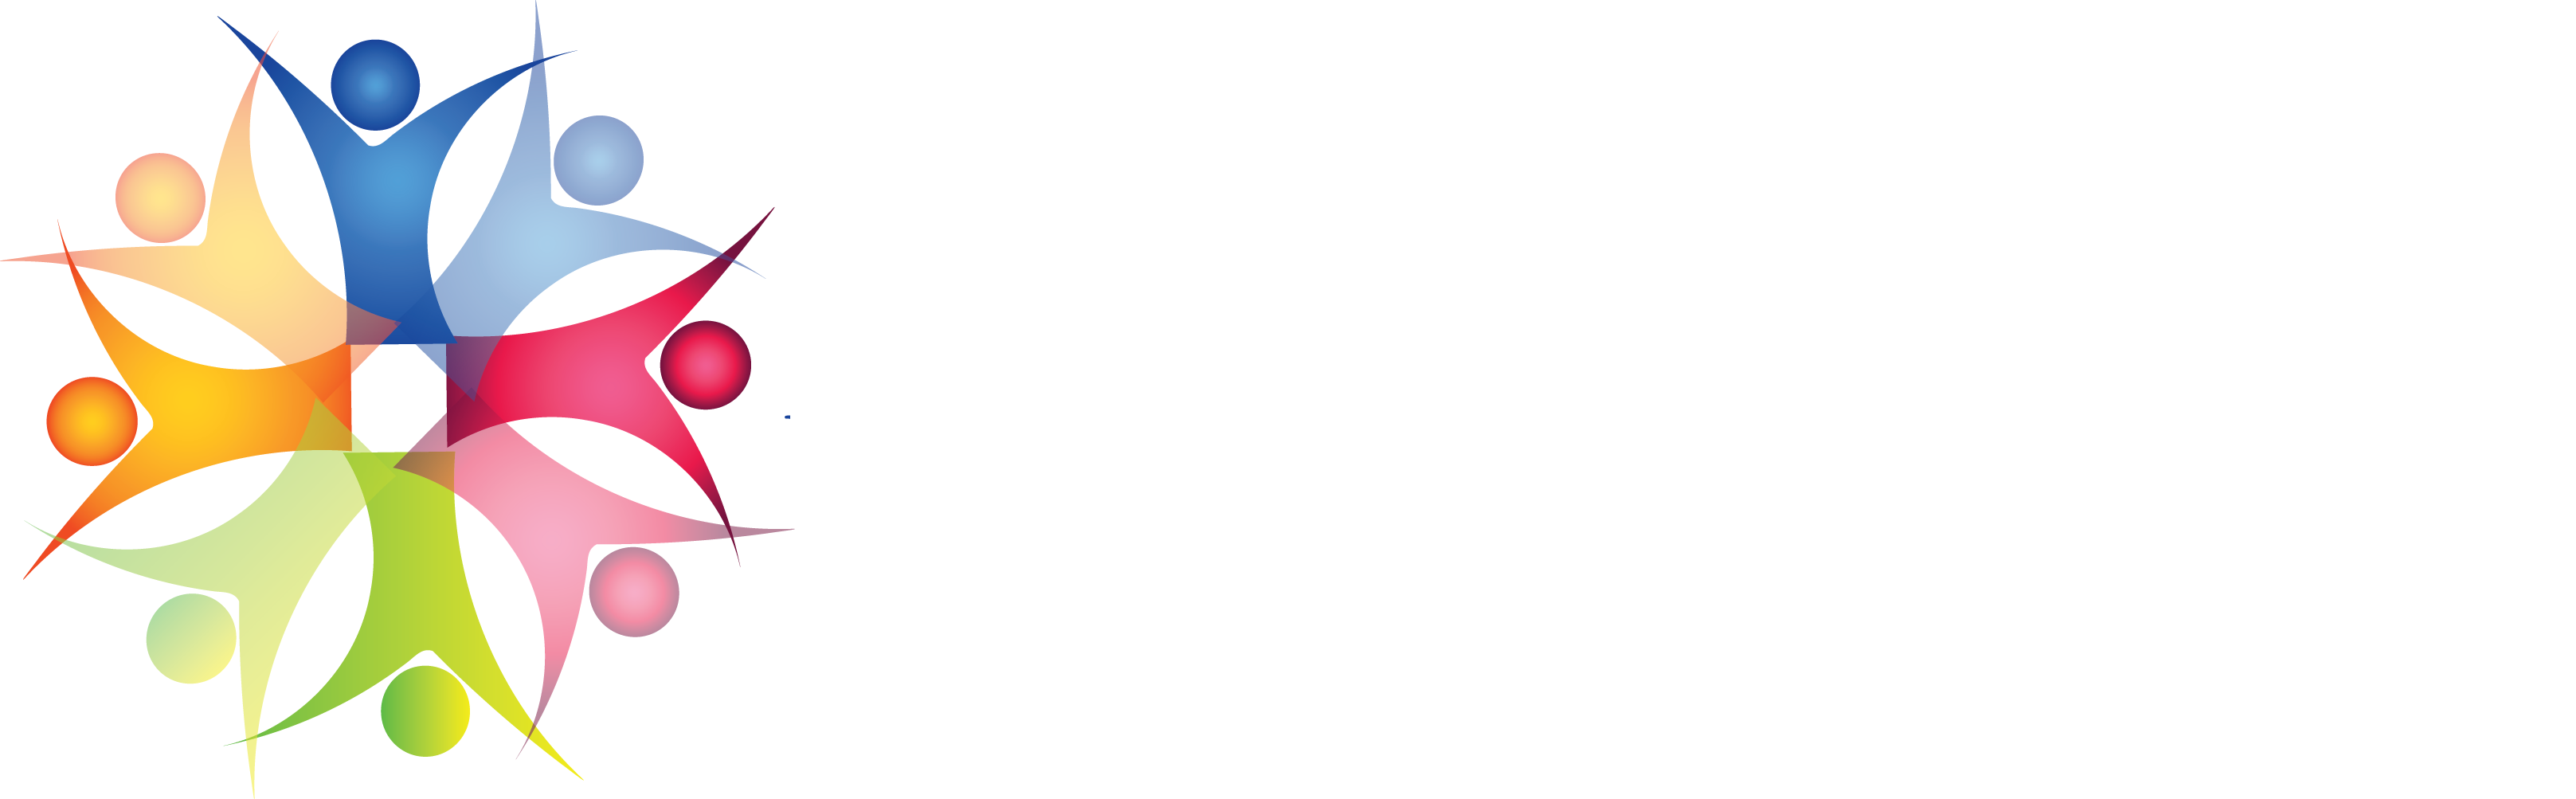 North Simcoe Victim Services